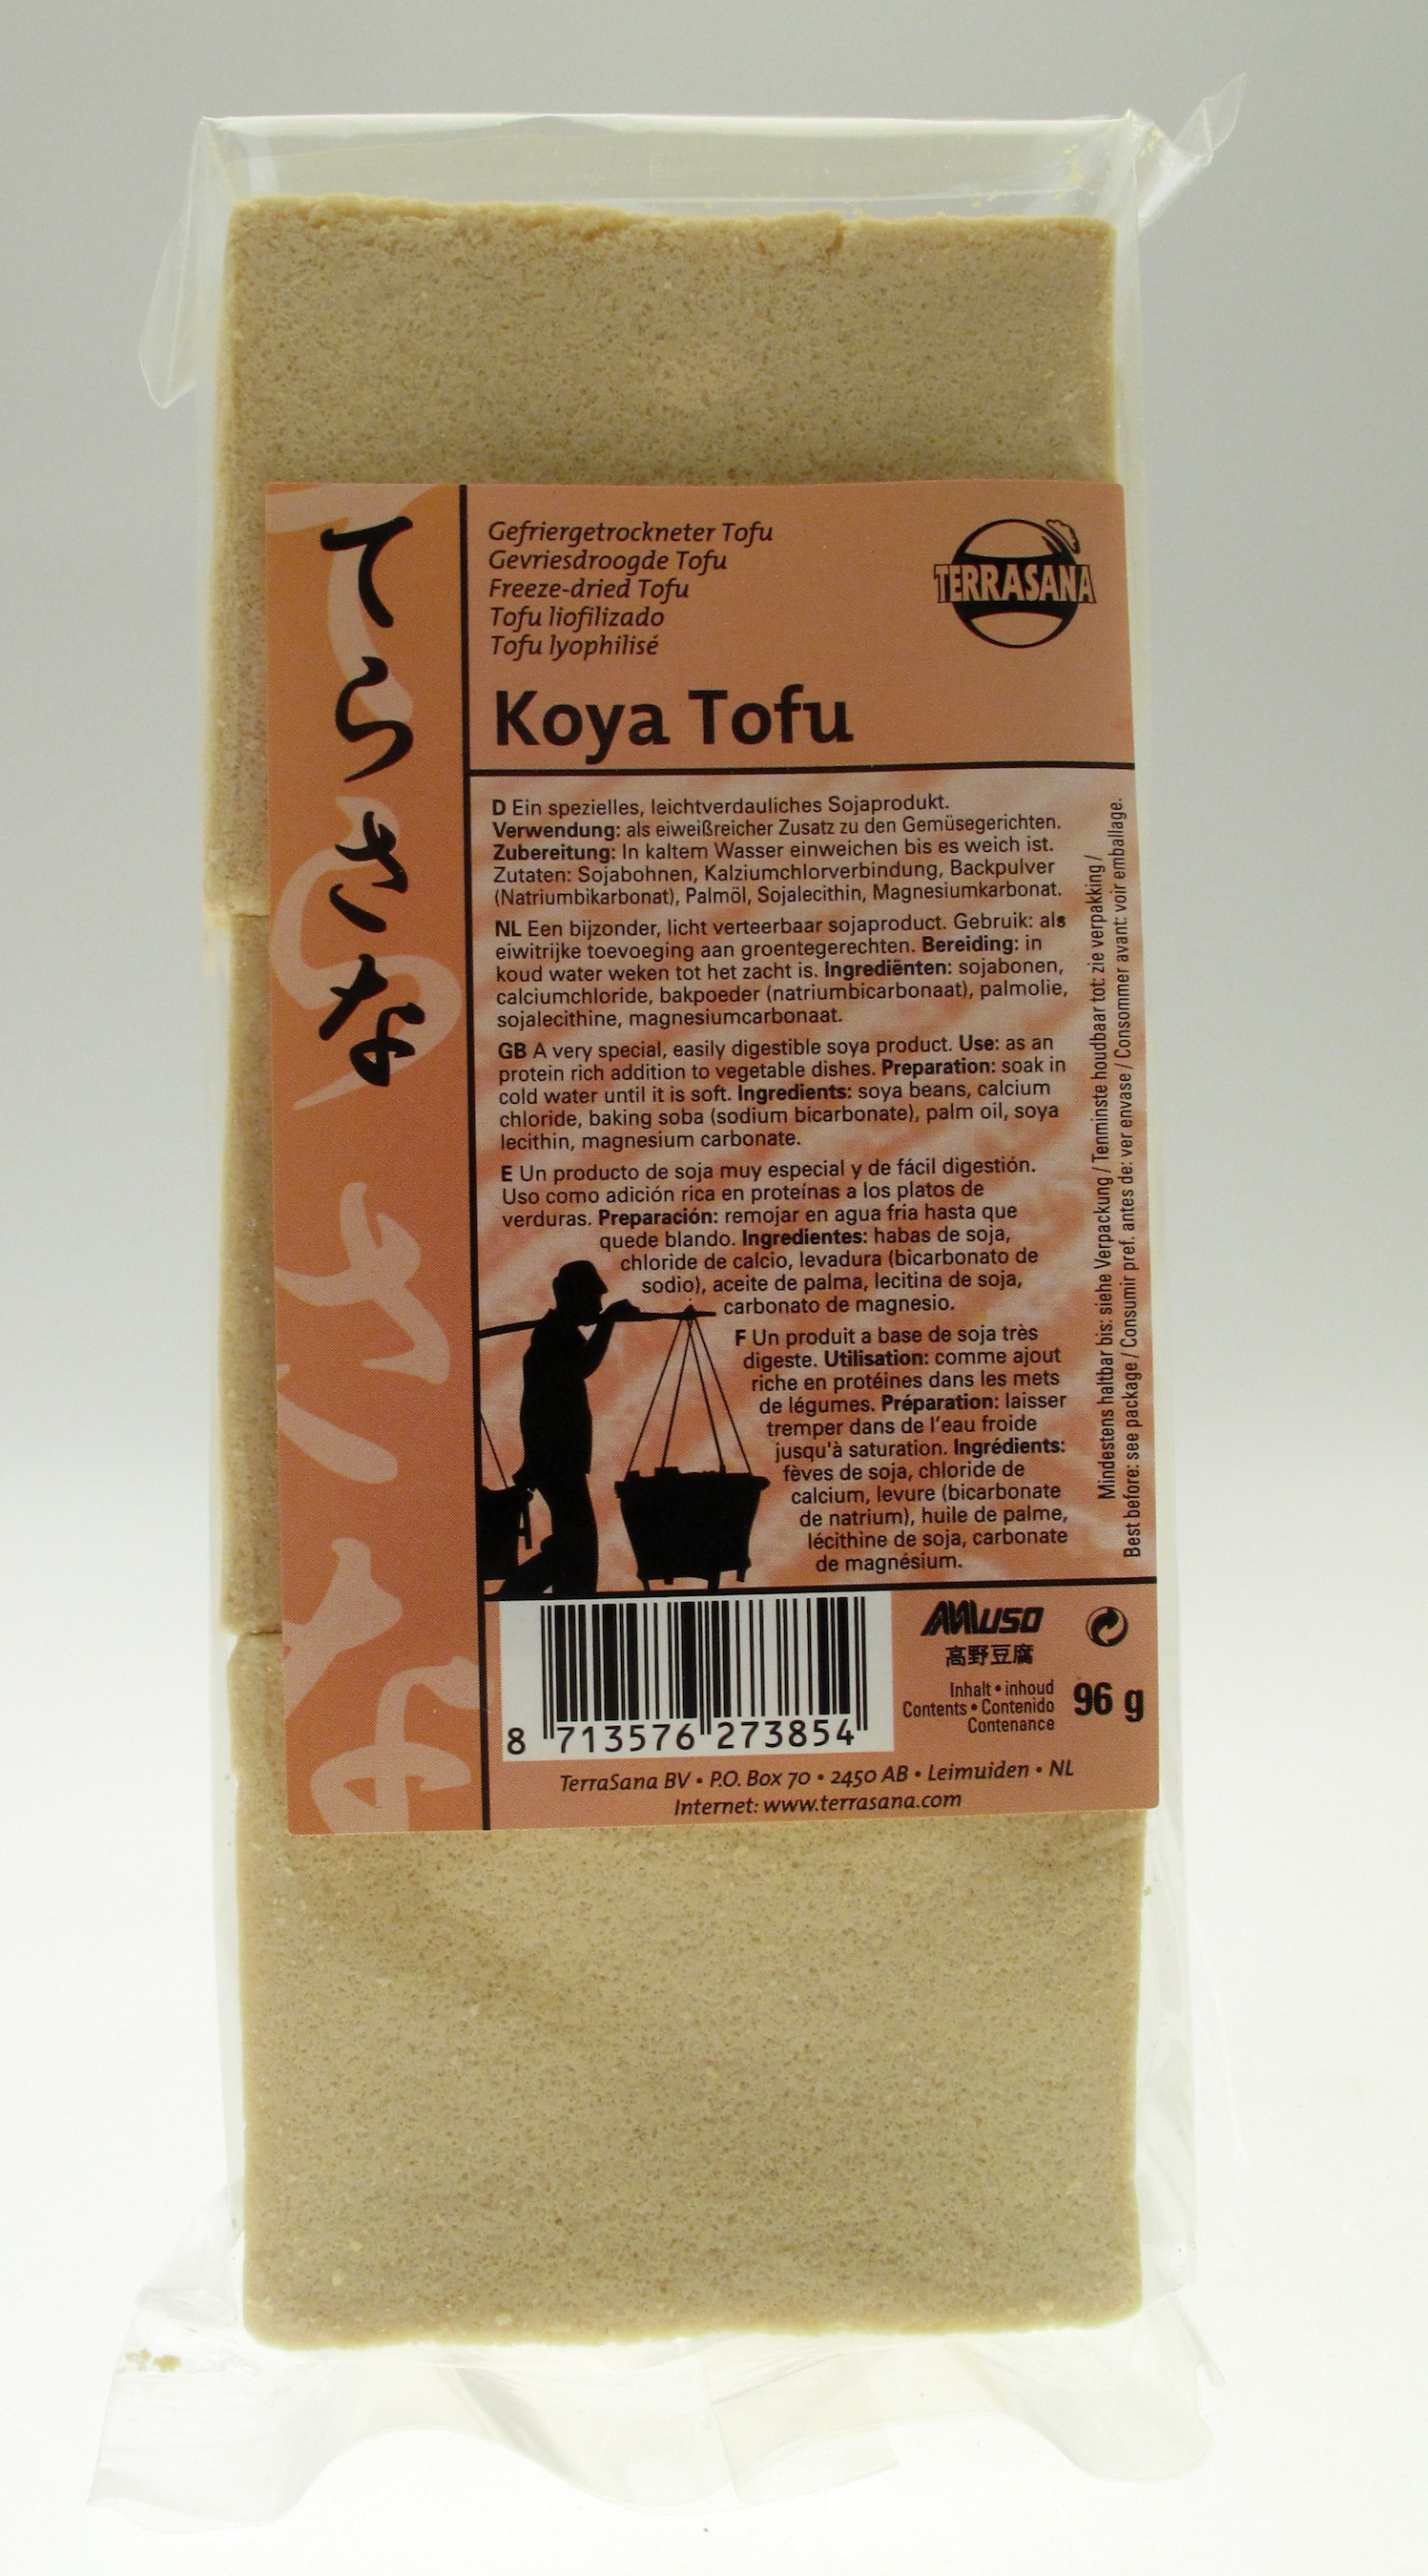 KoYa-Tofu (getrockneter Tofu)  
